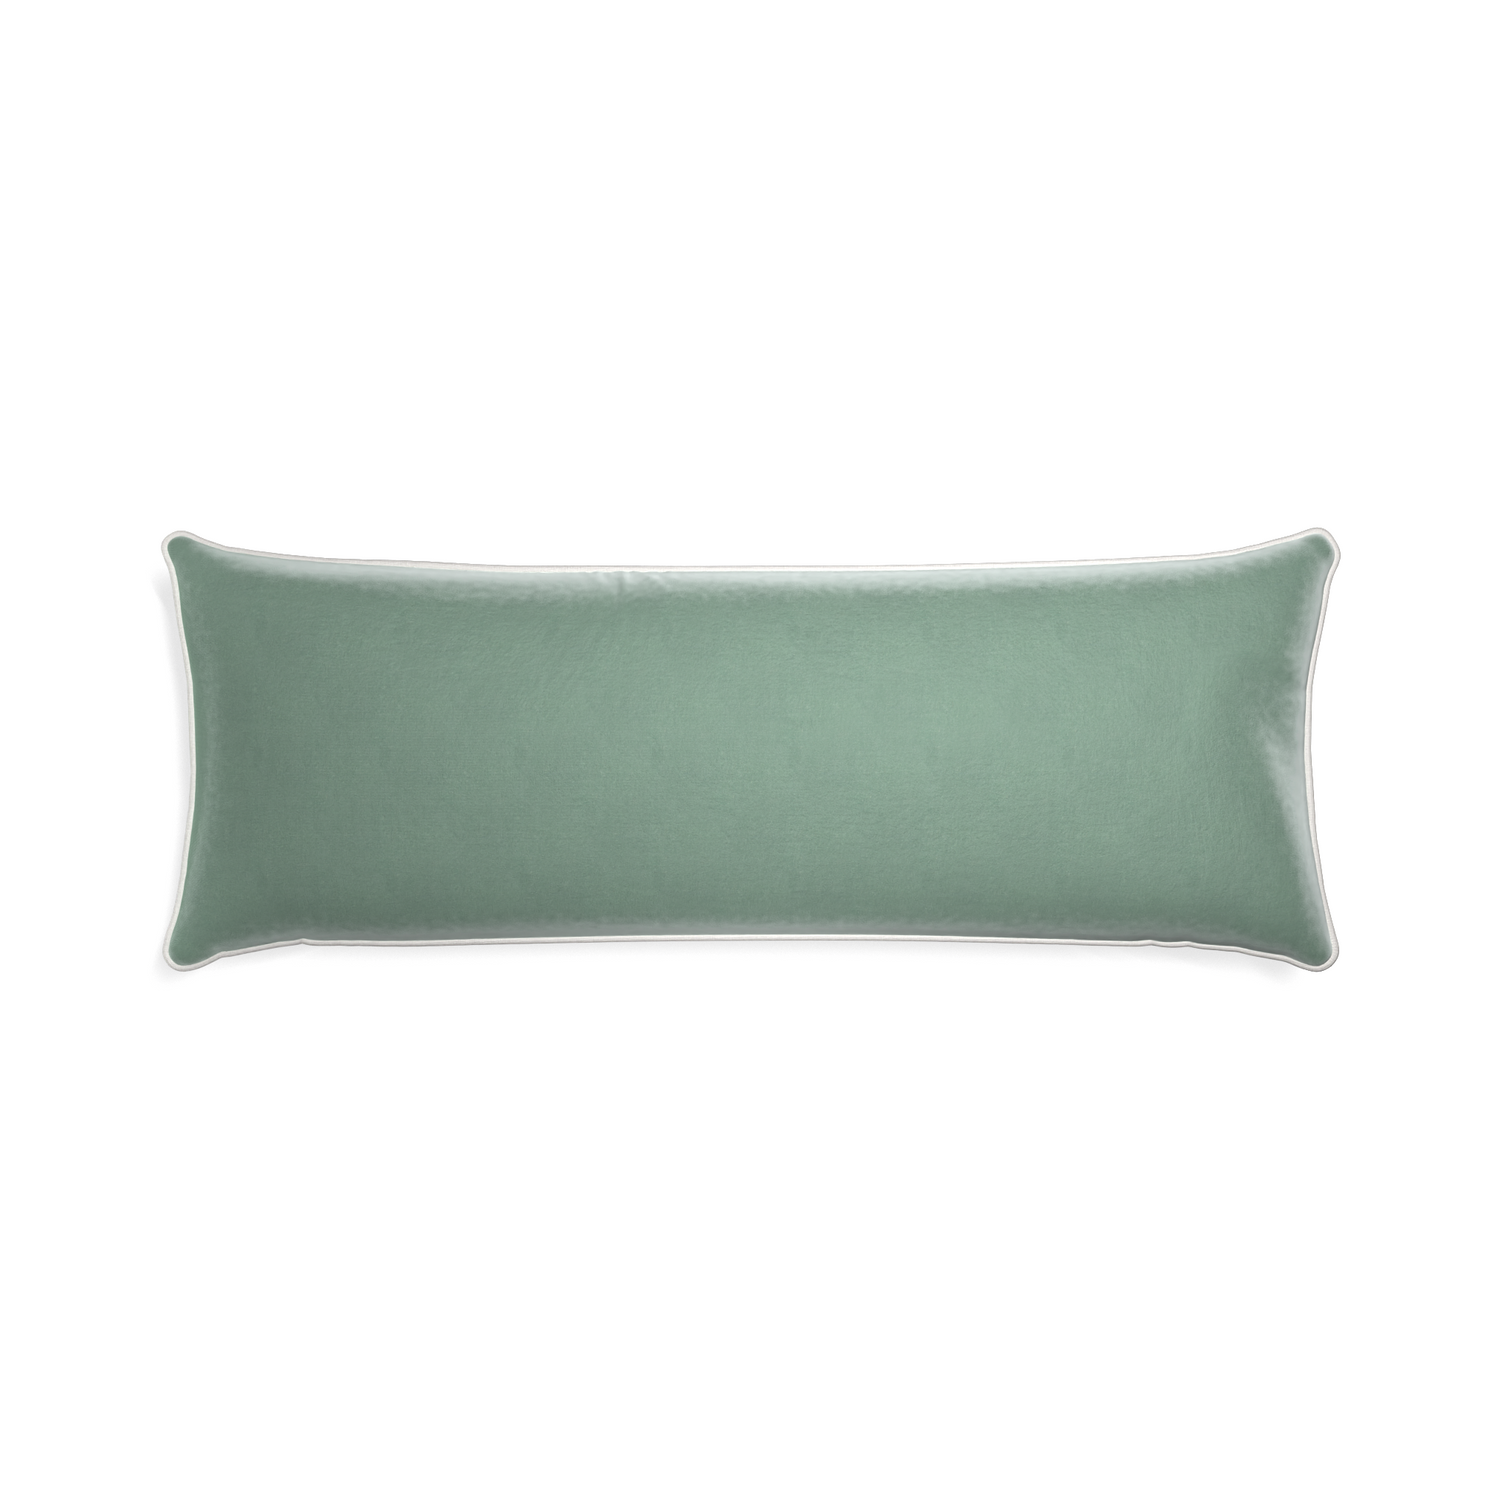 rectangle blue green velvet pillow with white piping